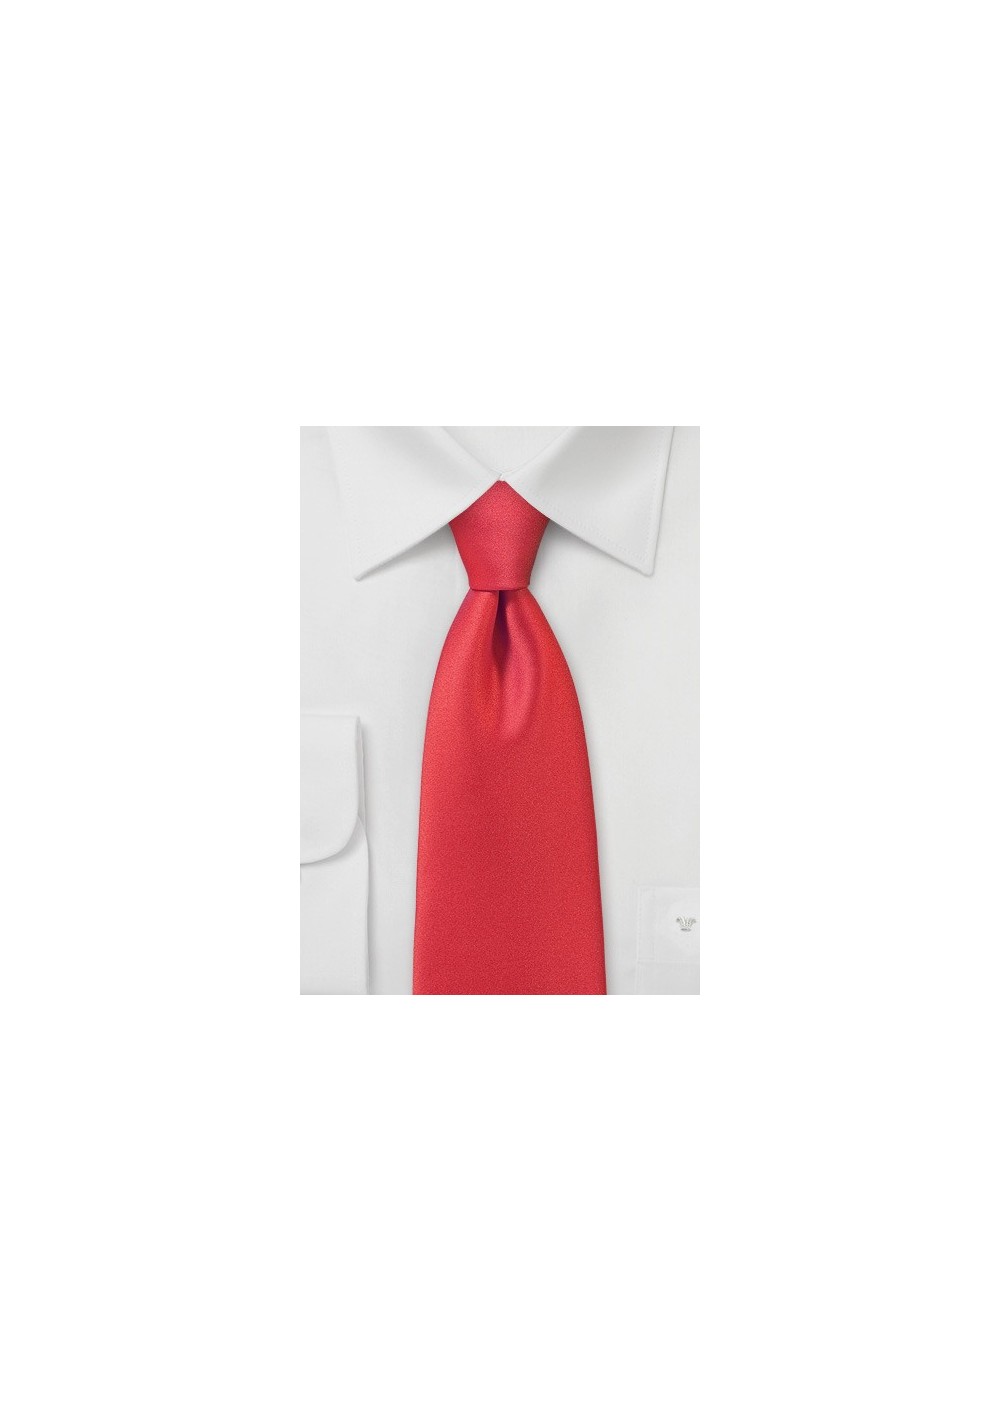 Poppy Red Mens Necktie